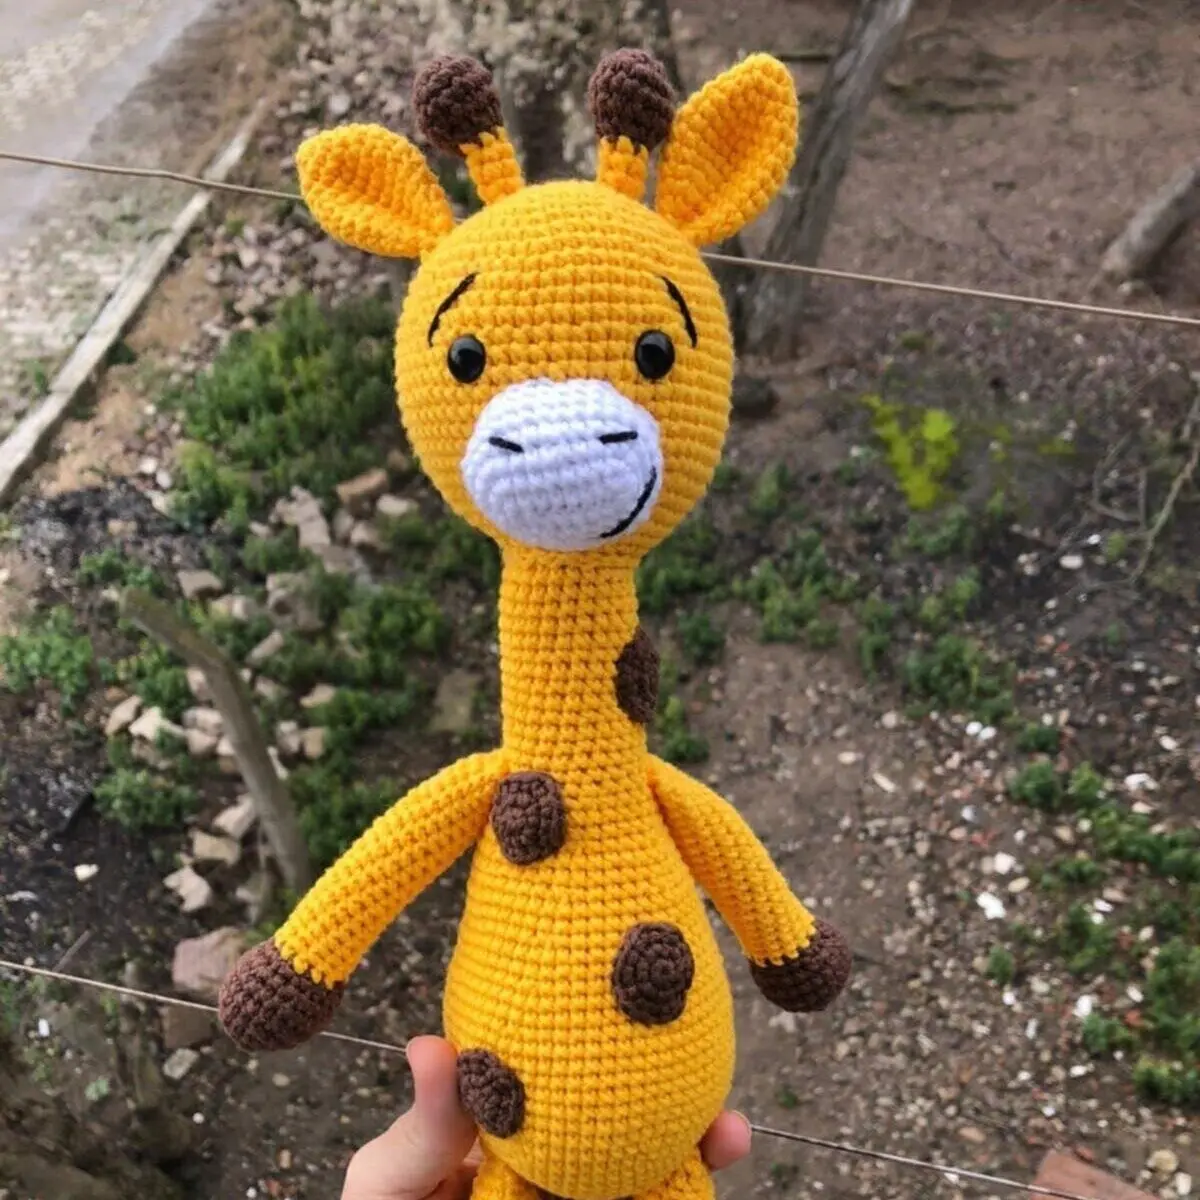 

Amigurumi Washable Organic Handmade Toy Cute Giraffe Play Sleeping Friend Fast Free Shipping